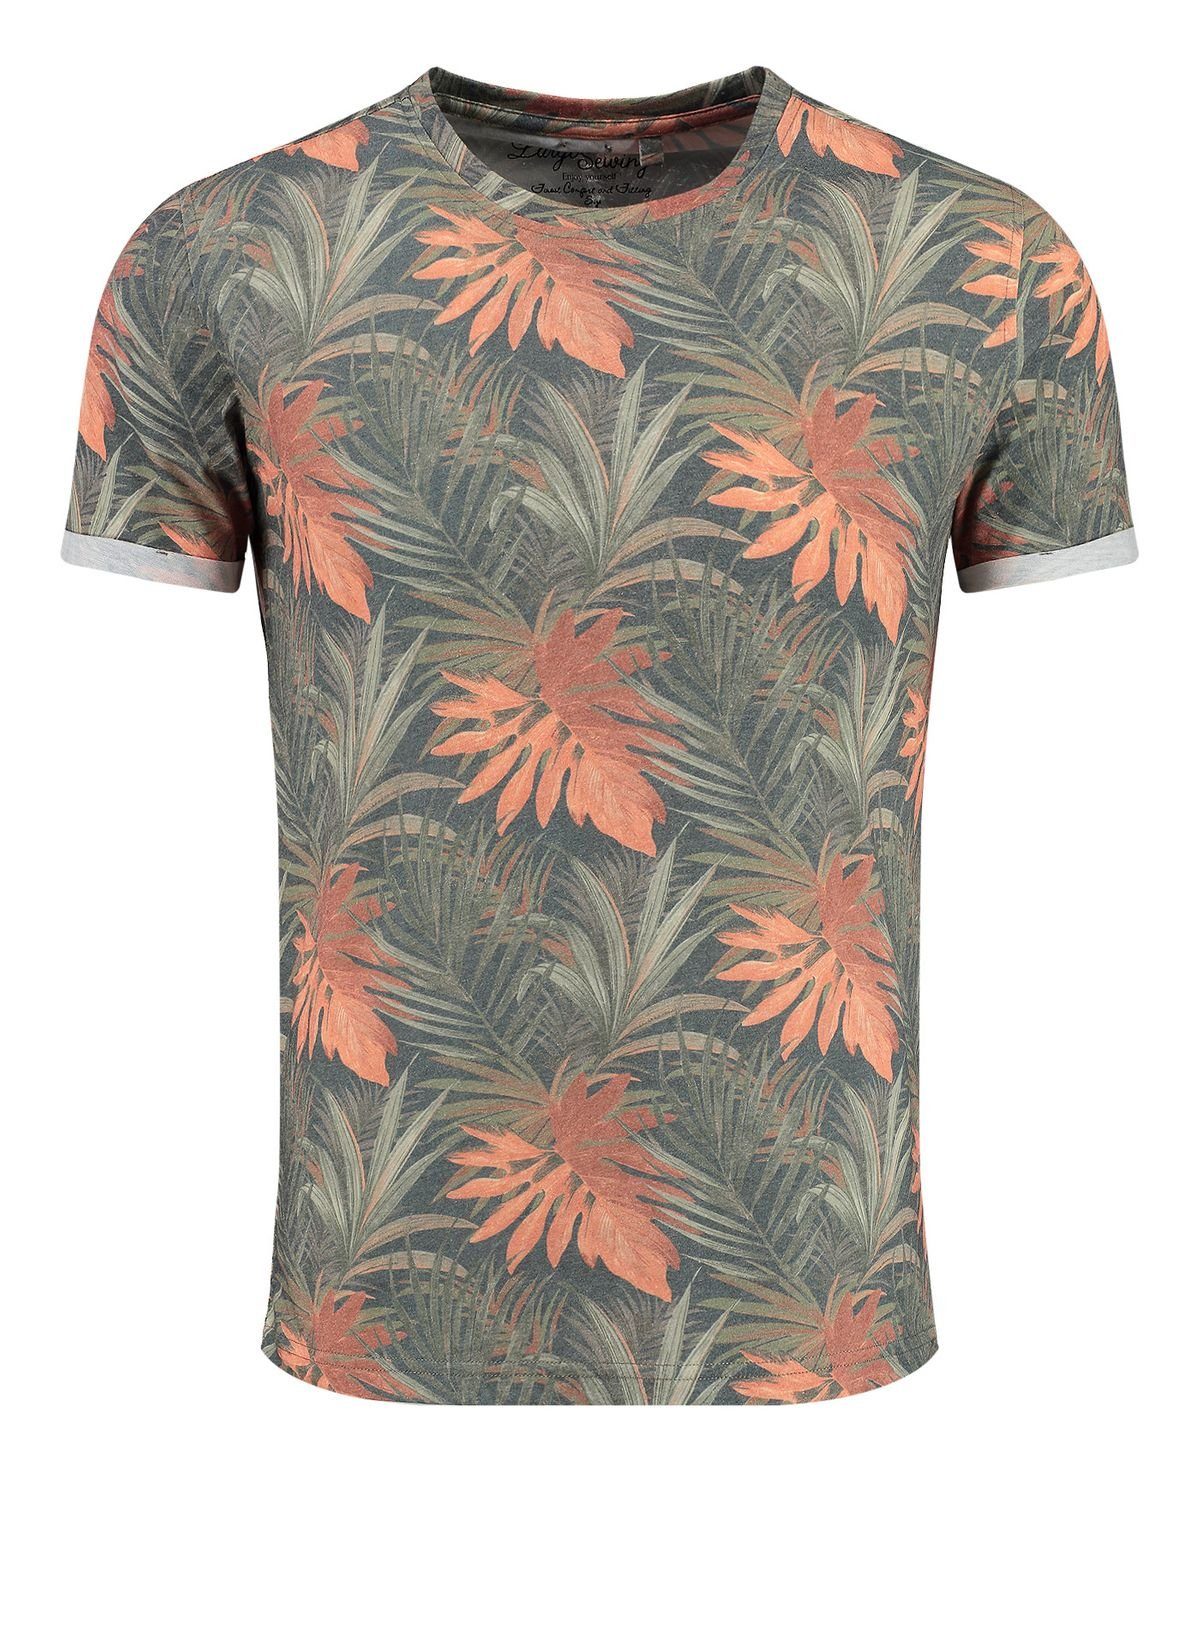 Key Largo T-Shirt MT00488 Leaf Hawaii Look Blumenmuster Rundhalsauschnitt allover Print kurzarm slim fit